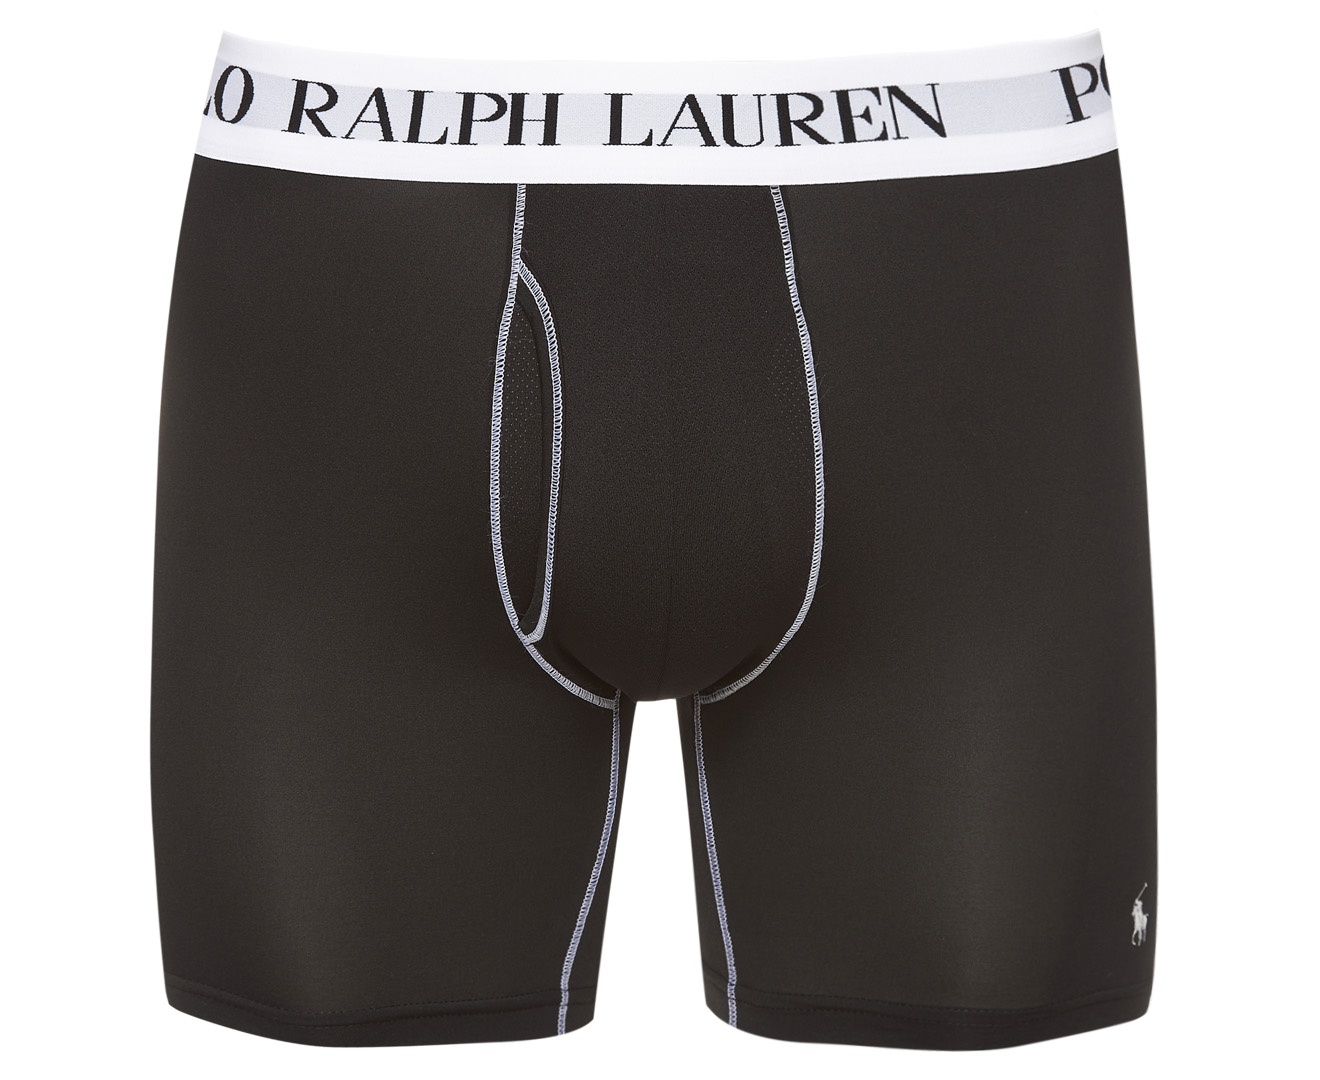 Polo Ralph Lauren Men's Boxer Brief 3-Pack - Grey/Charcoal/Black